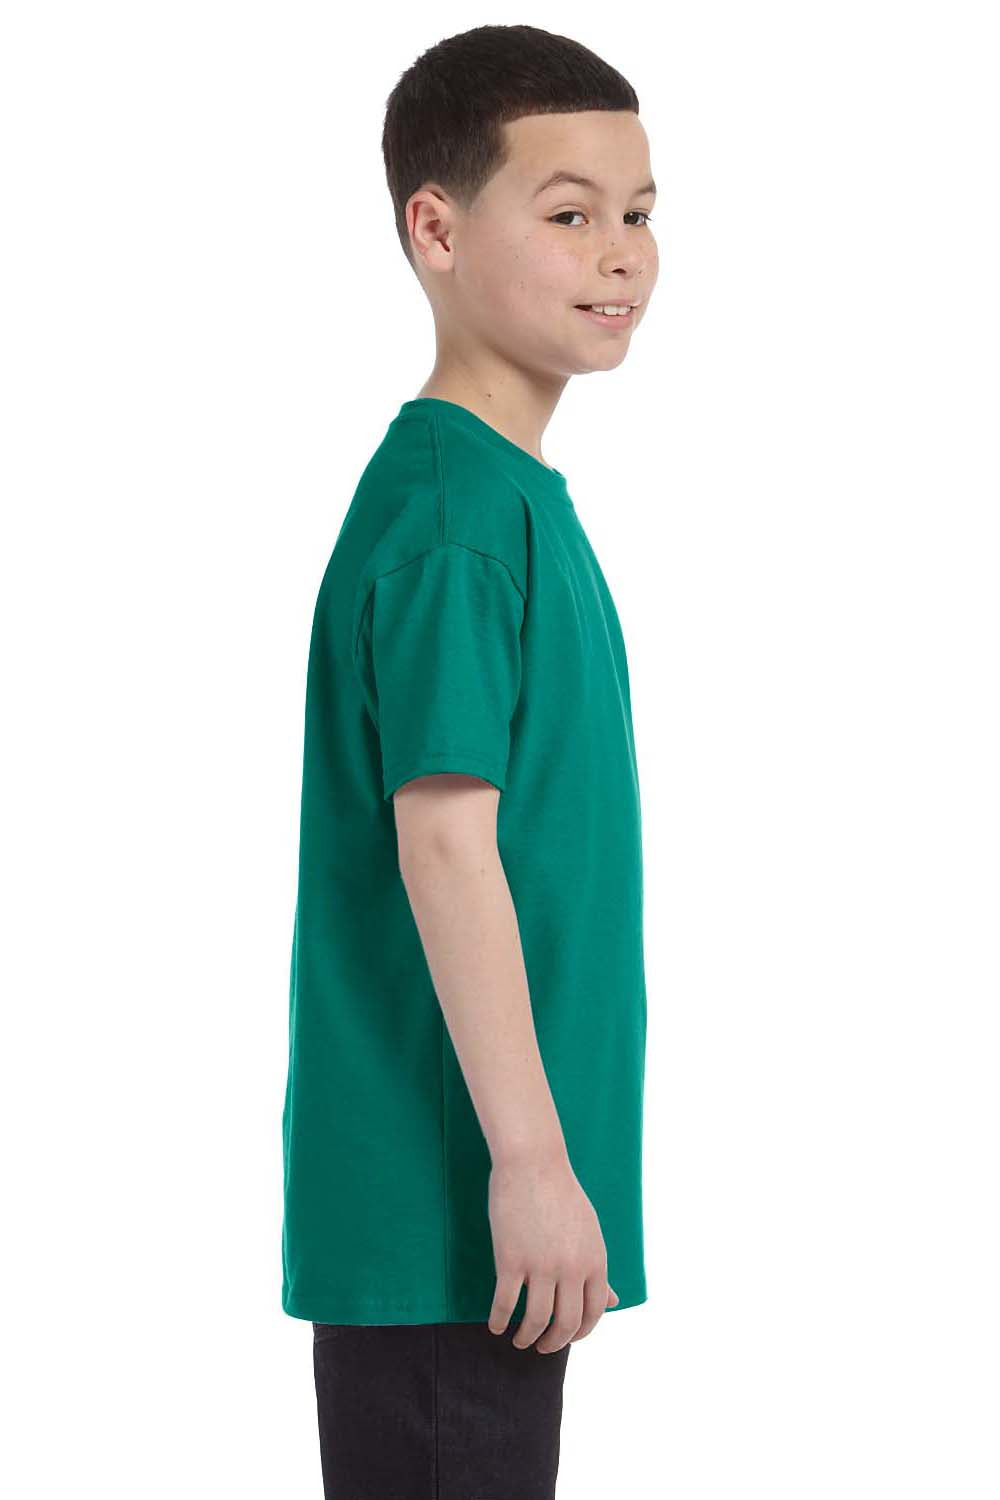 Jerzees 29B Youth Dri-Power Moisture Wicking Short Sleeve Crewneck T-Shirt Jade Green Side